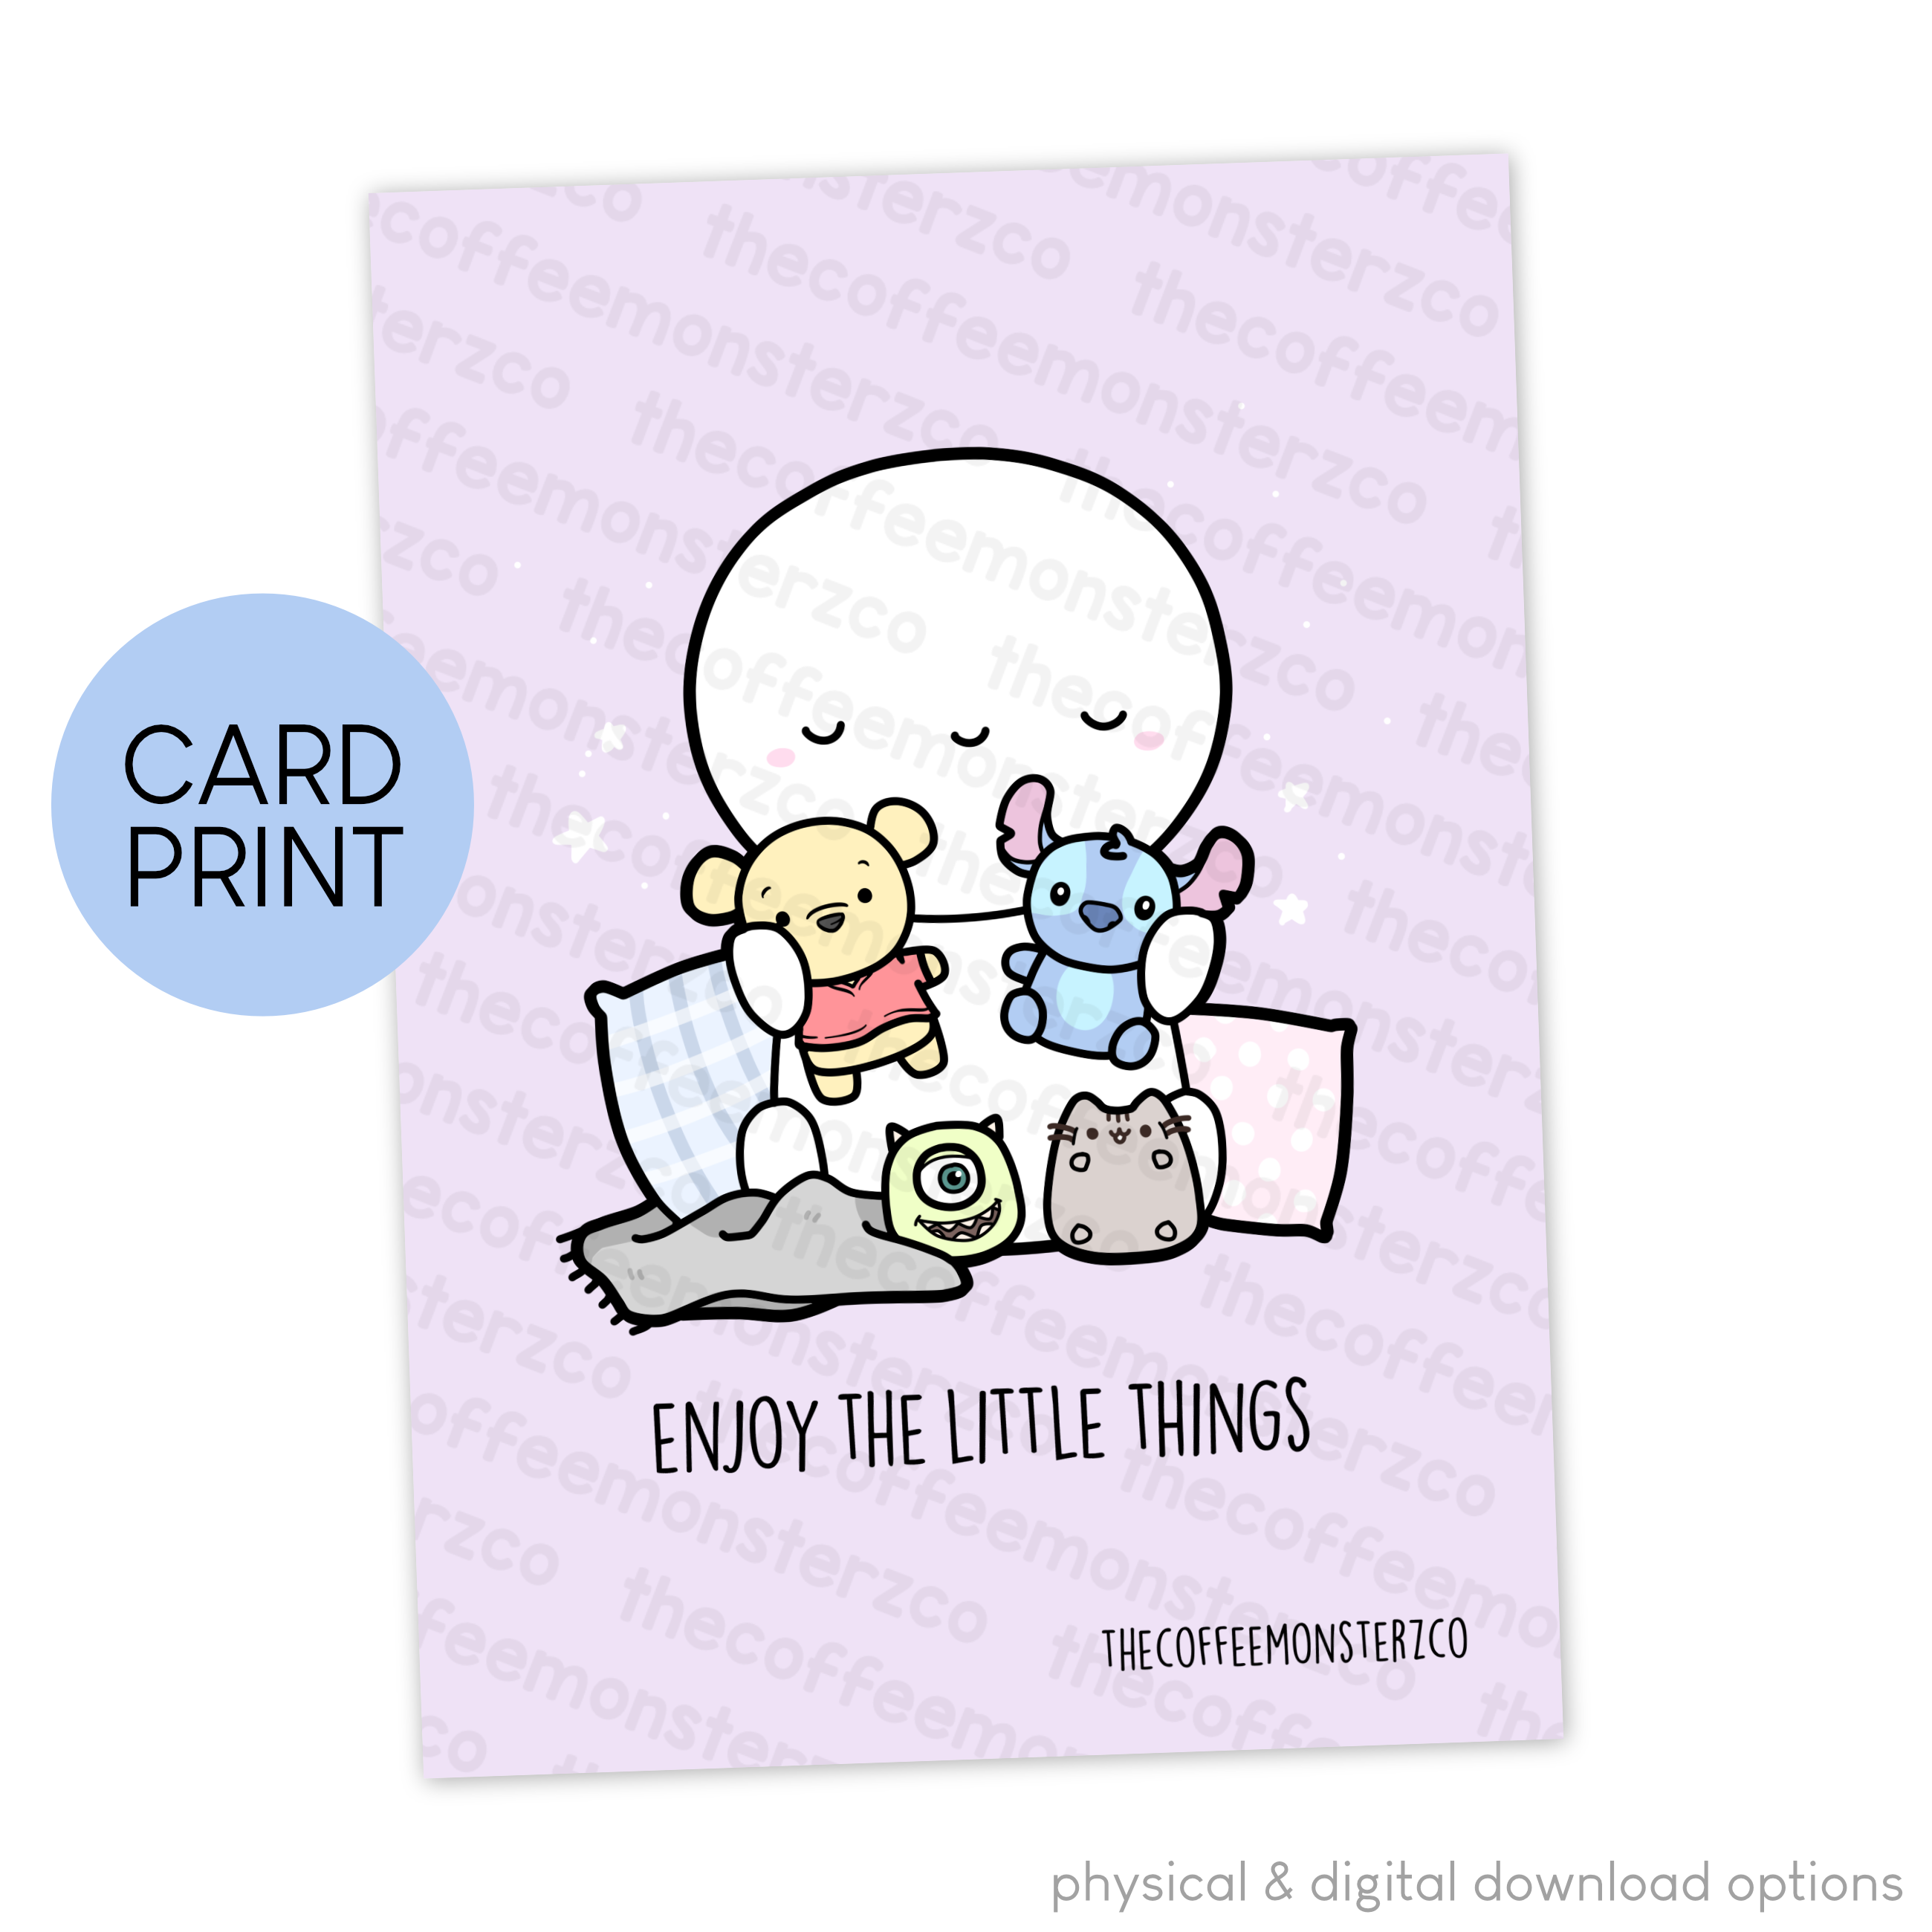 Enjoy the Little Things - Card Print